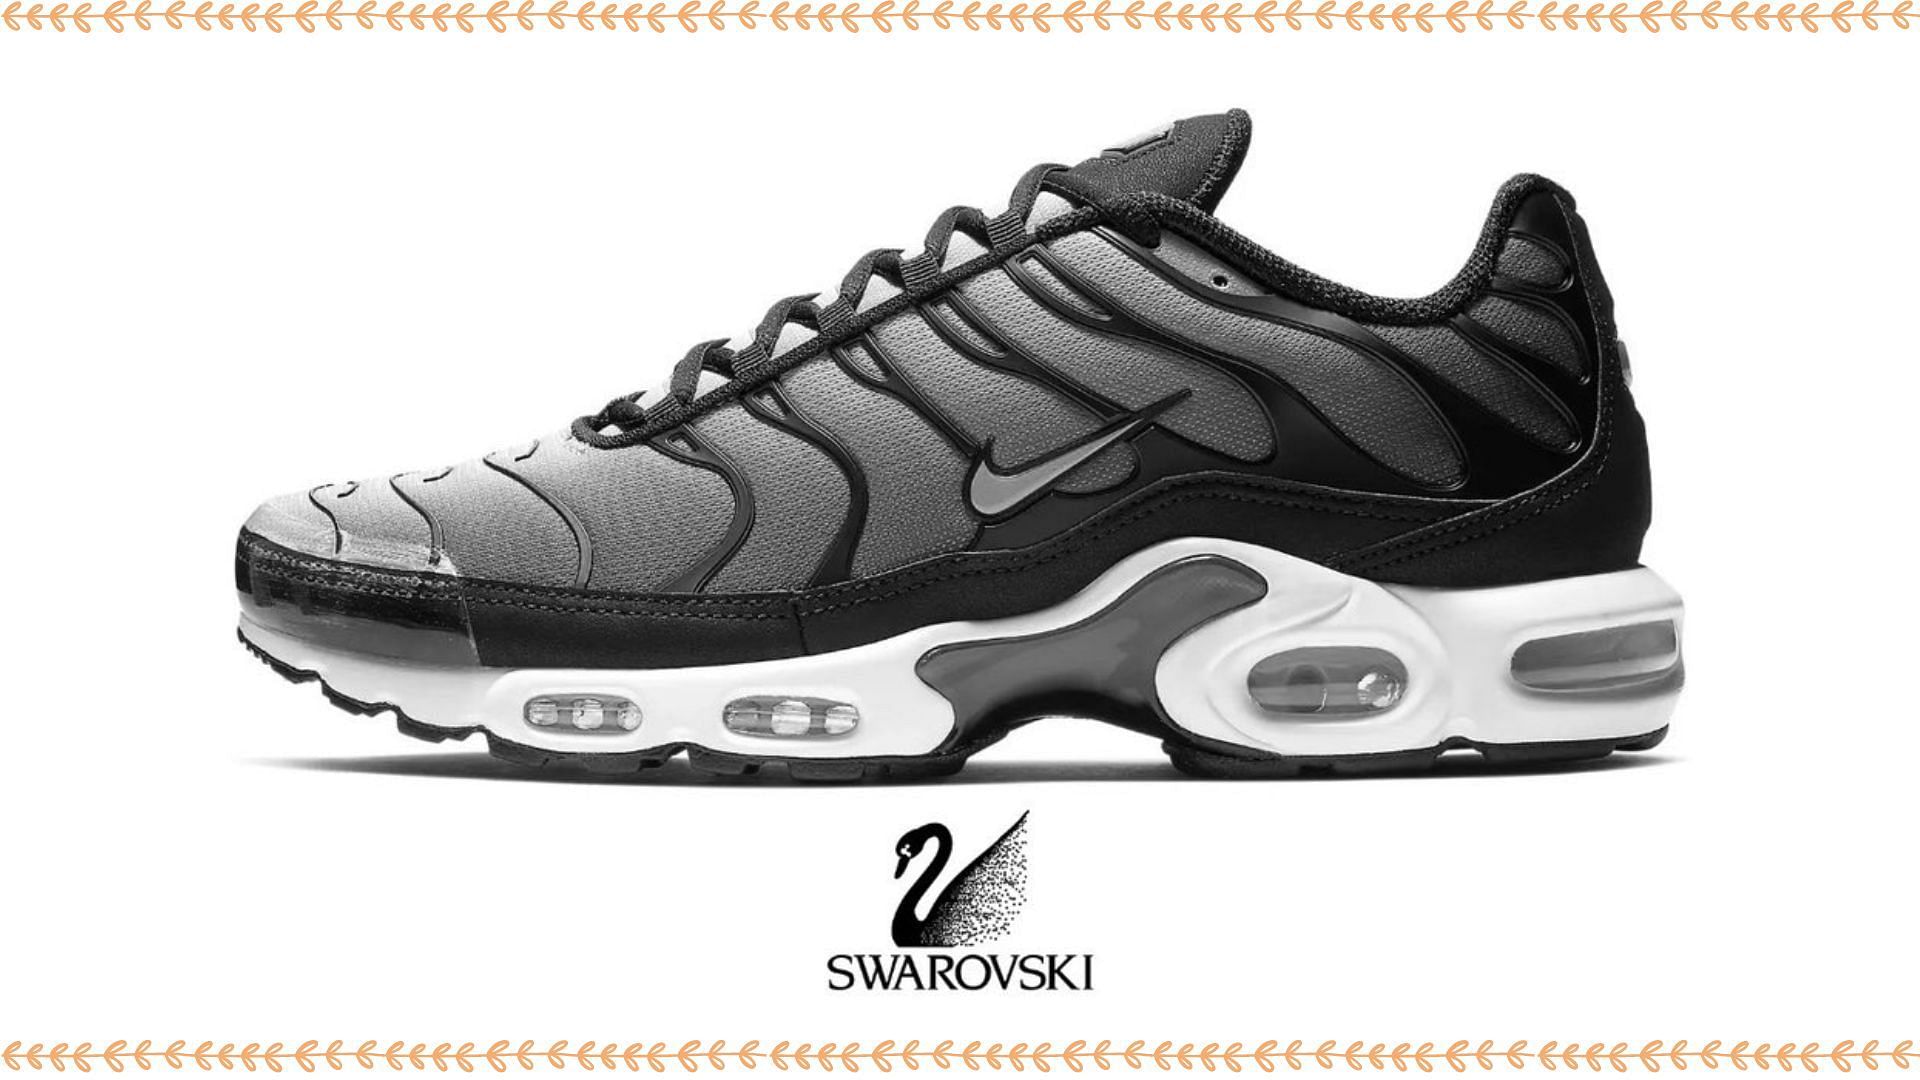 Swarovski x Nike Air Max Plus sneakers (Image via Twitter/@TheToeBox)